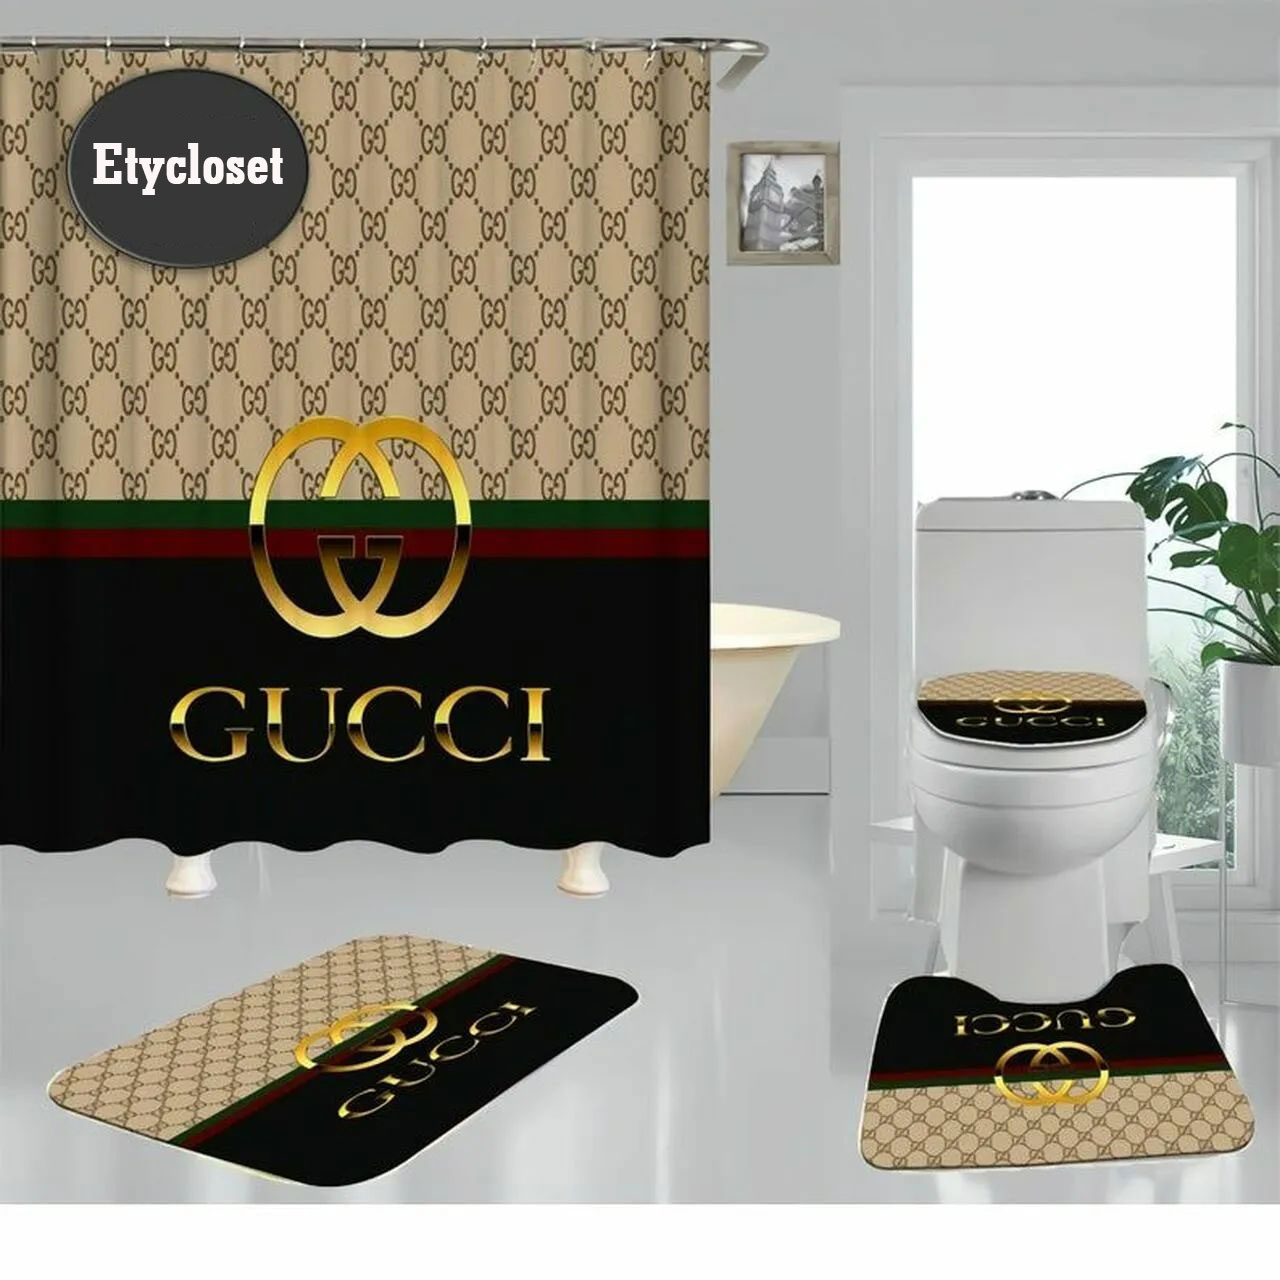 Gucci Bathroom Set Home Decor Hypebeast Bath Mat Luxury Fashion Brand